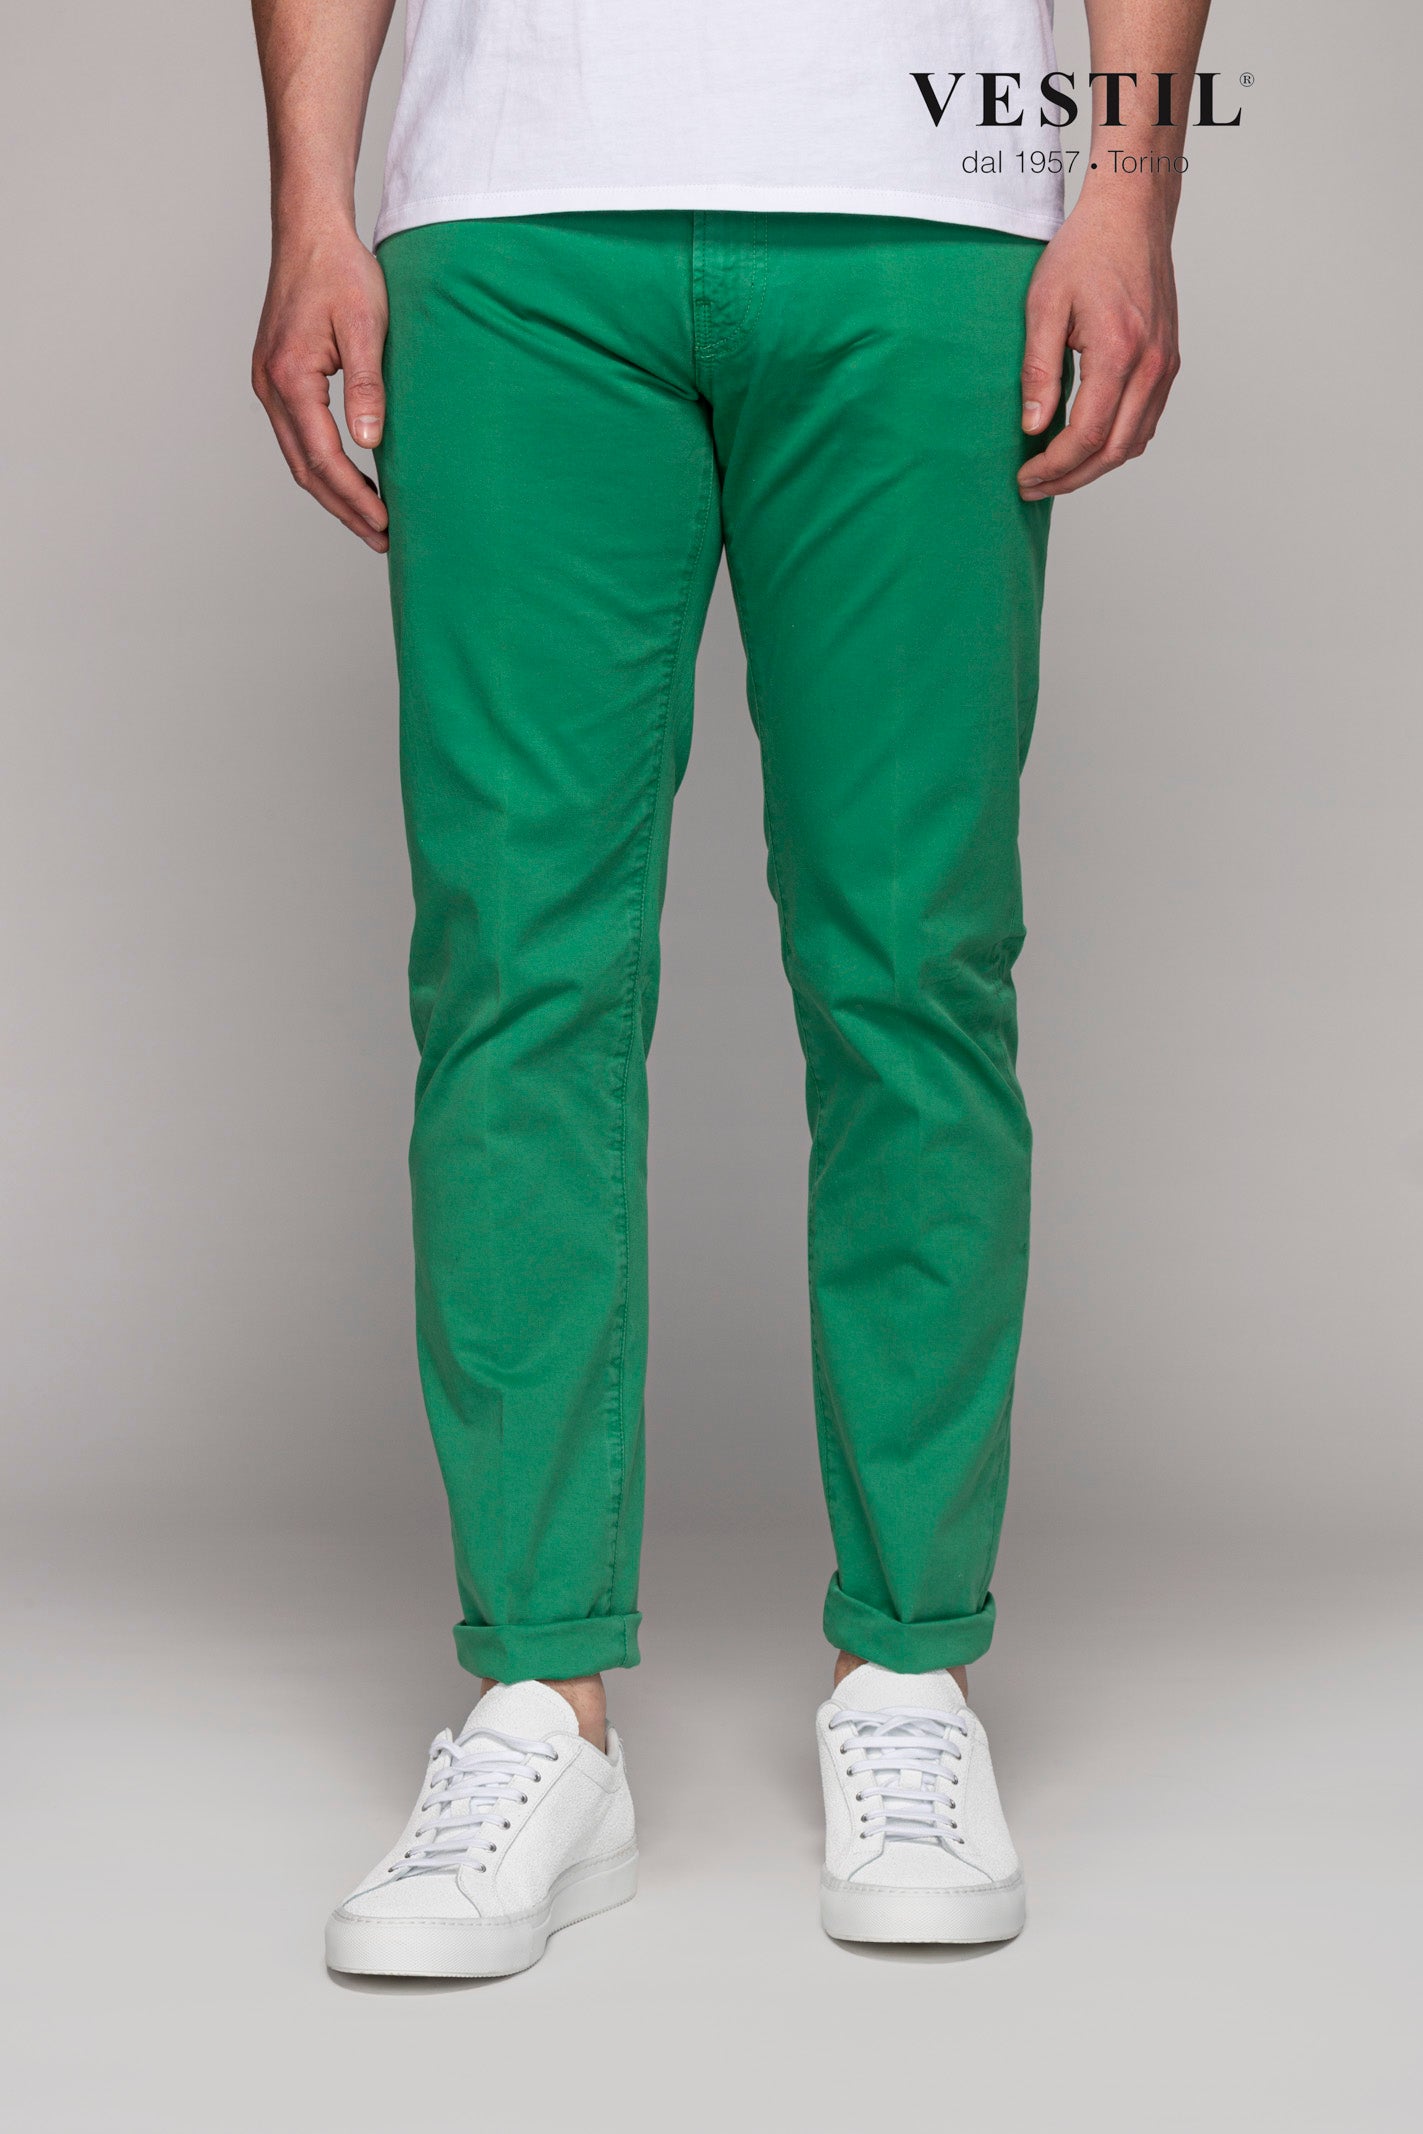 PT05 pantalone verde acceso uomo.